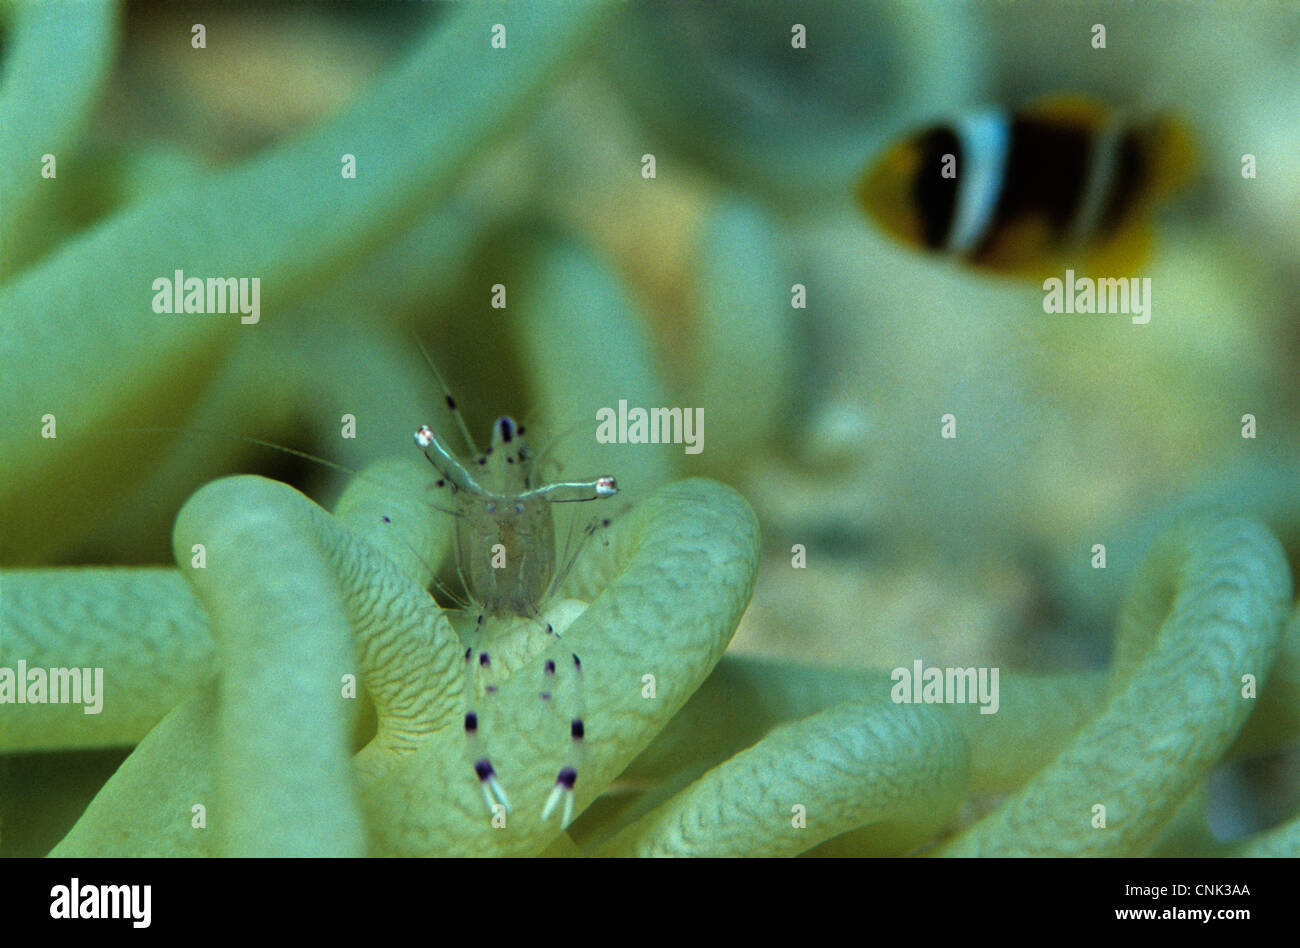 Anemone shrimp, Periclimenes longicarpus, in Leathery Sea anemone, Heteractis crispa, Red Sea Anemonefish, Amphiprion bicinctus Stock Photo